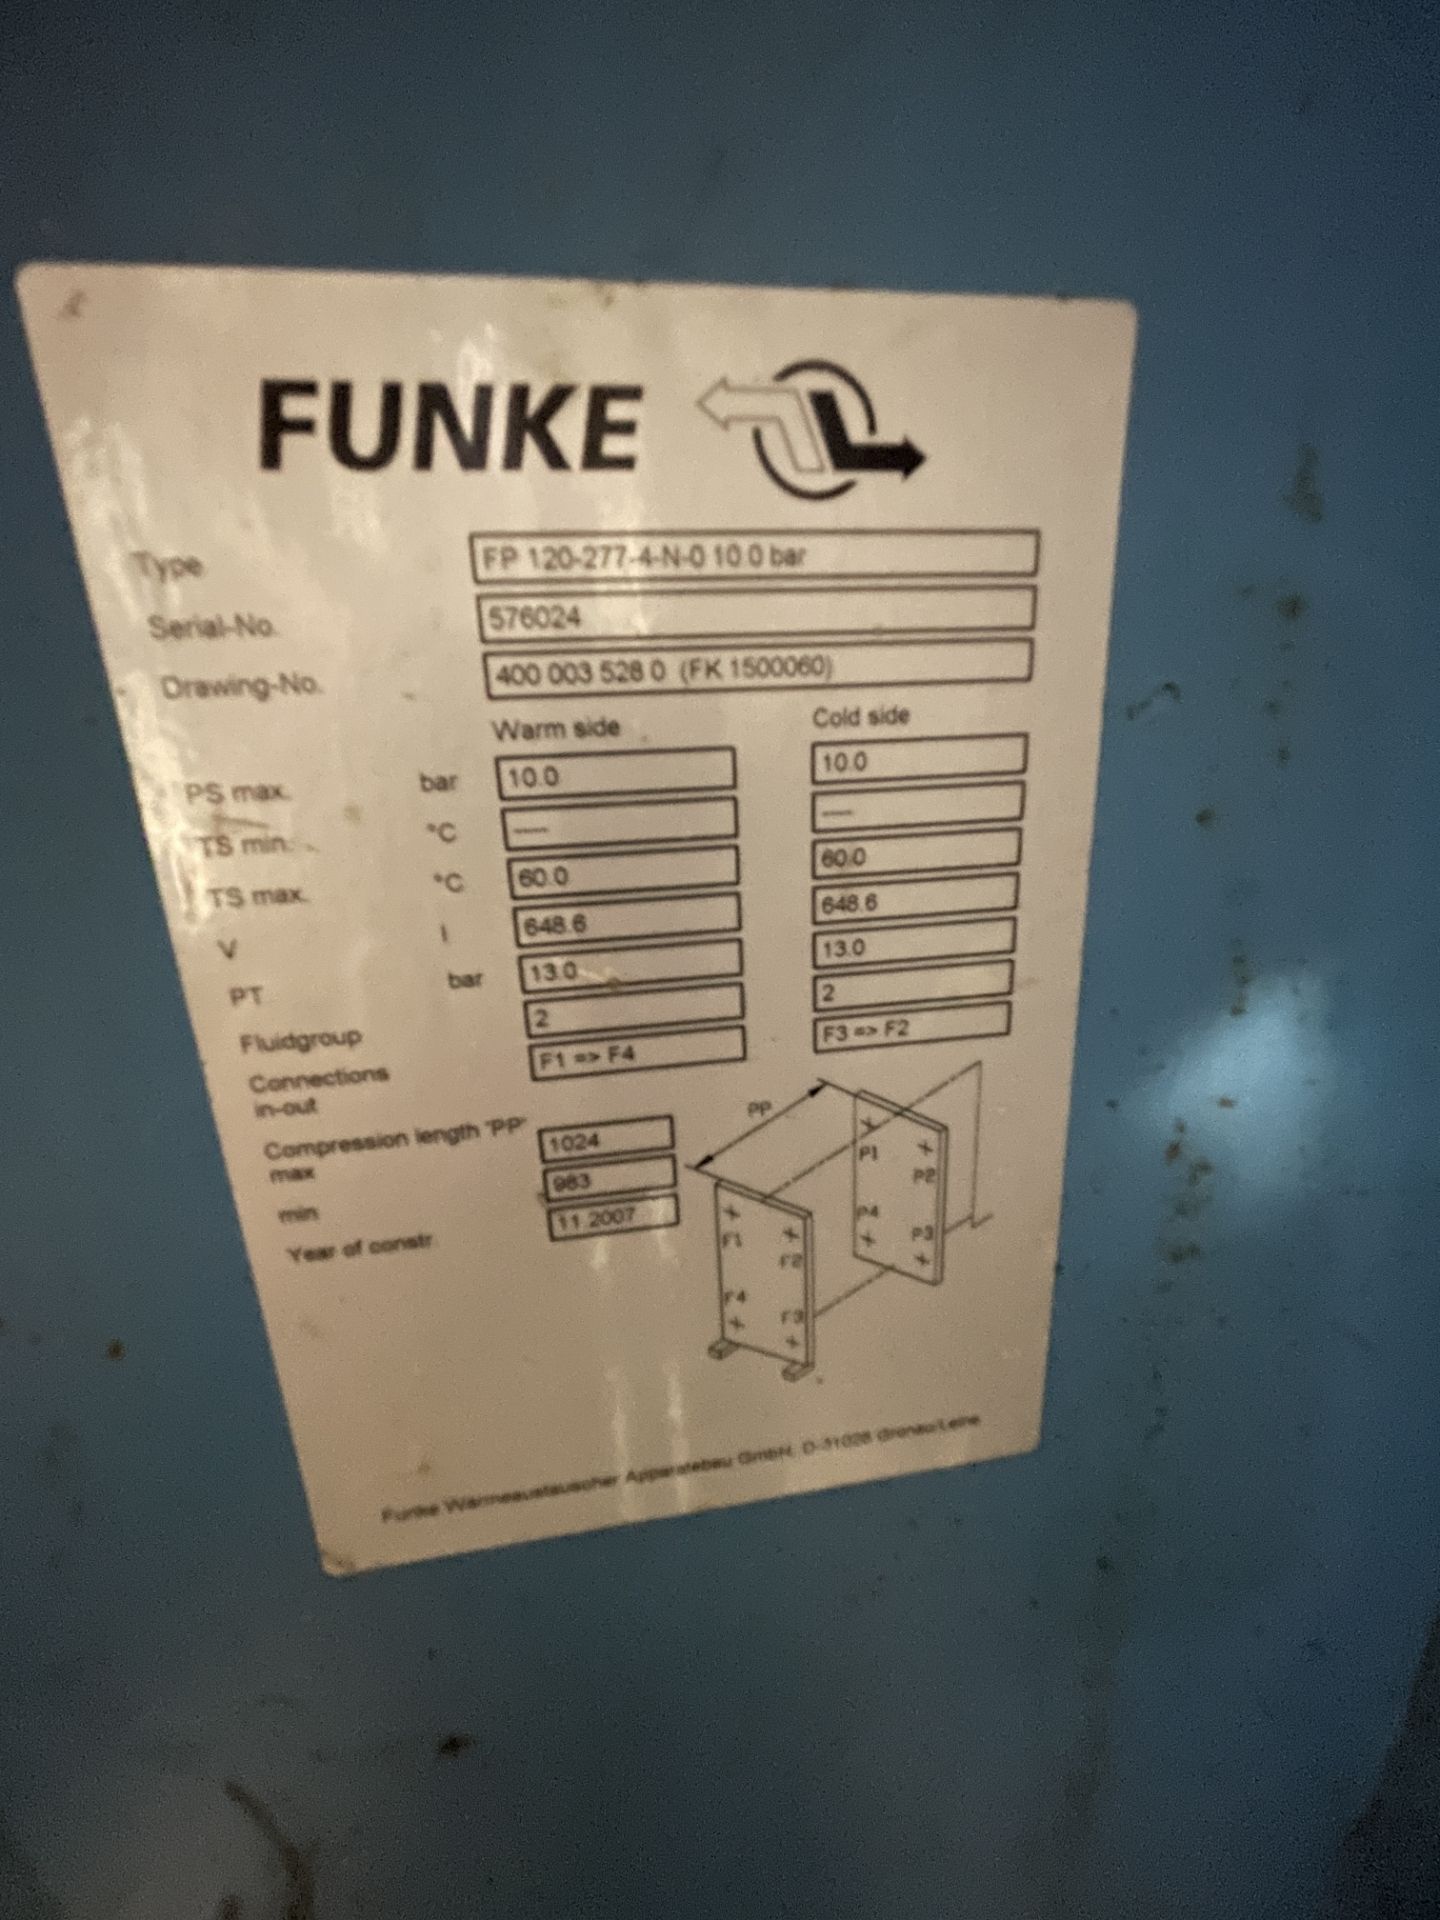 Funke FP 120-277-4-N-0 10.0 BAR PLATE HEAT EXCHANGER, serial no. 576024, year of manufacture 2007 ( - Image 2 of 3